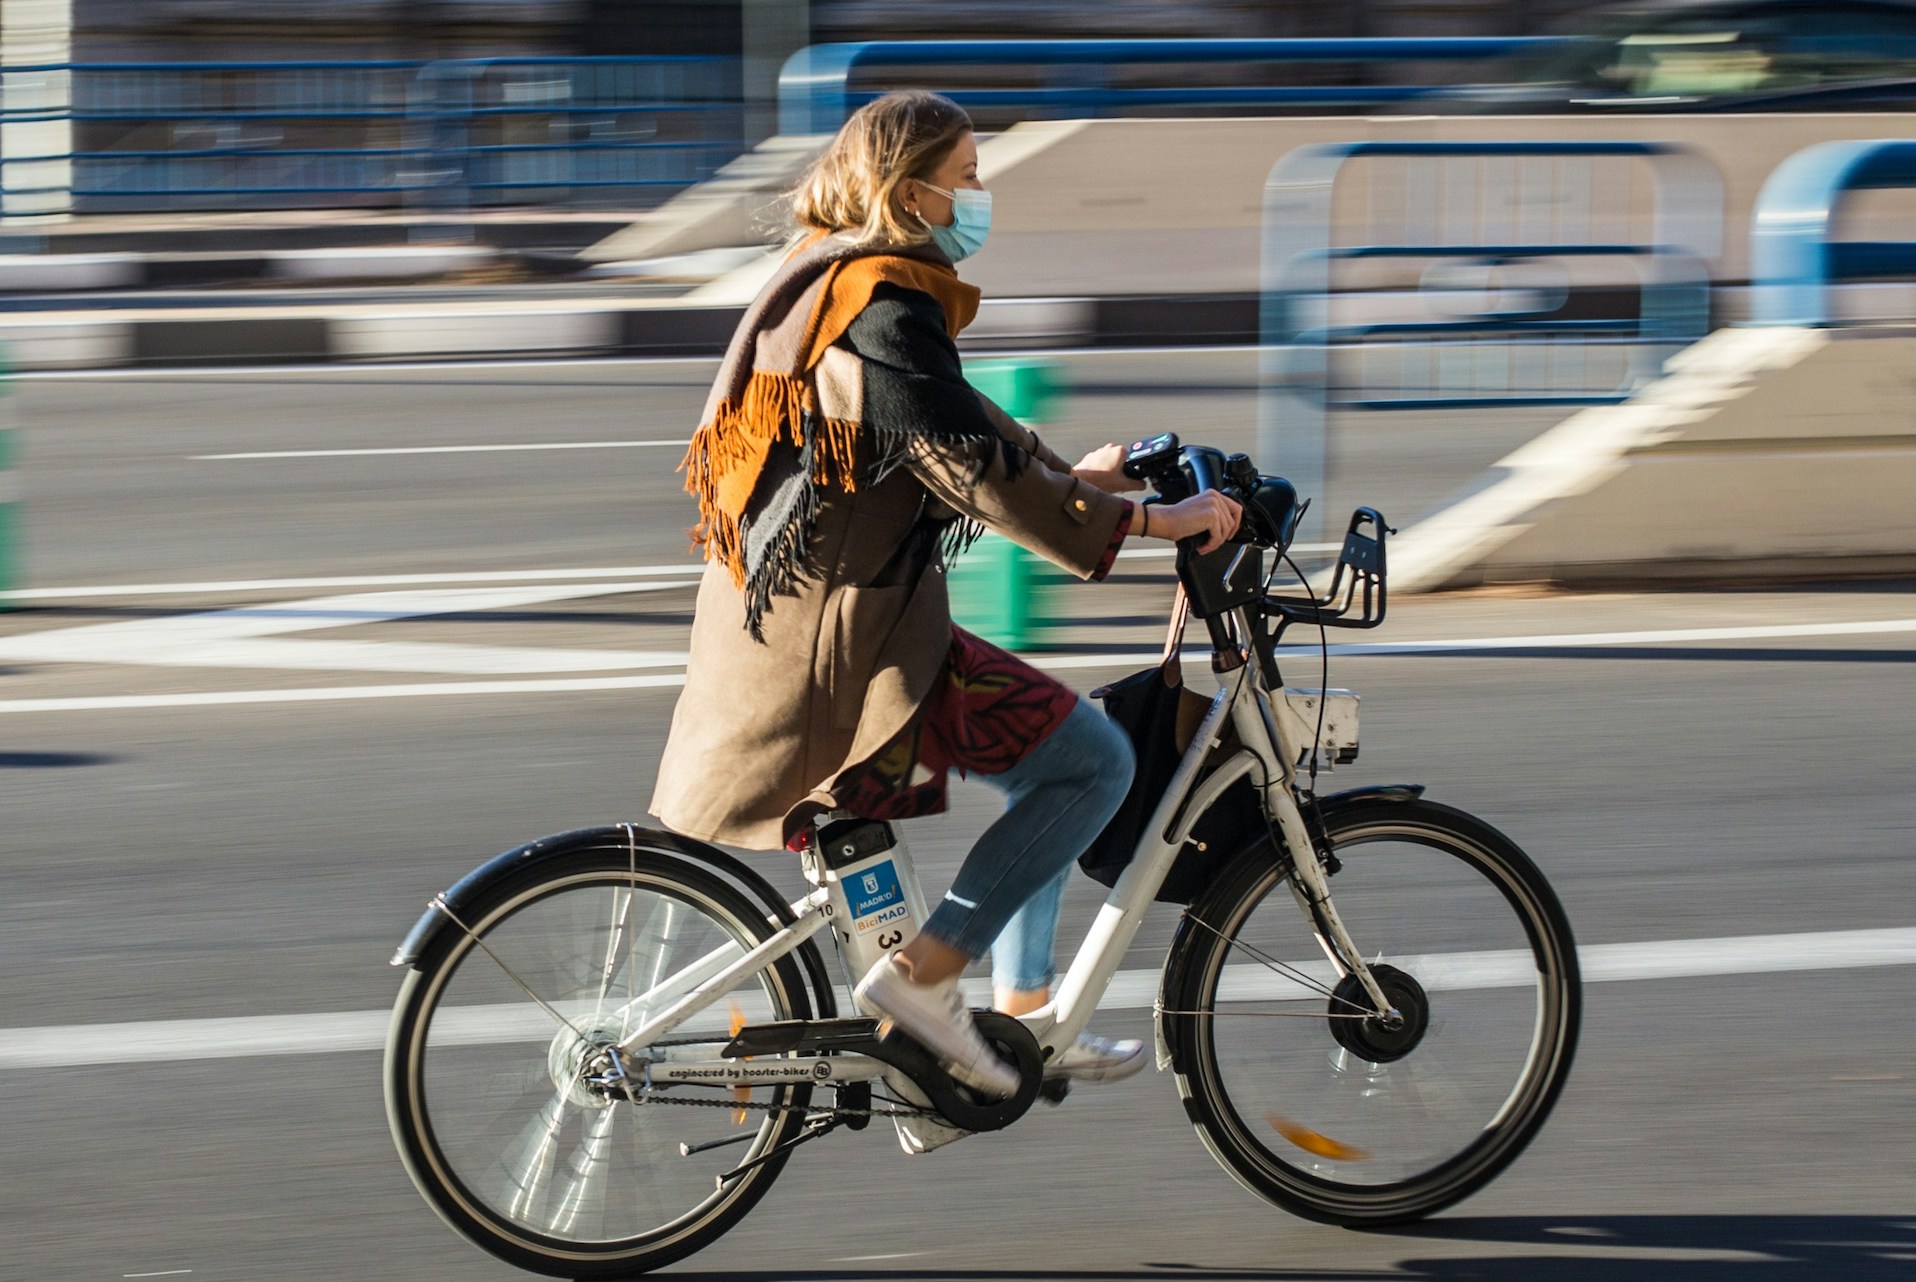 A woman wearing a facemask rides an e-bike in an urban setting.